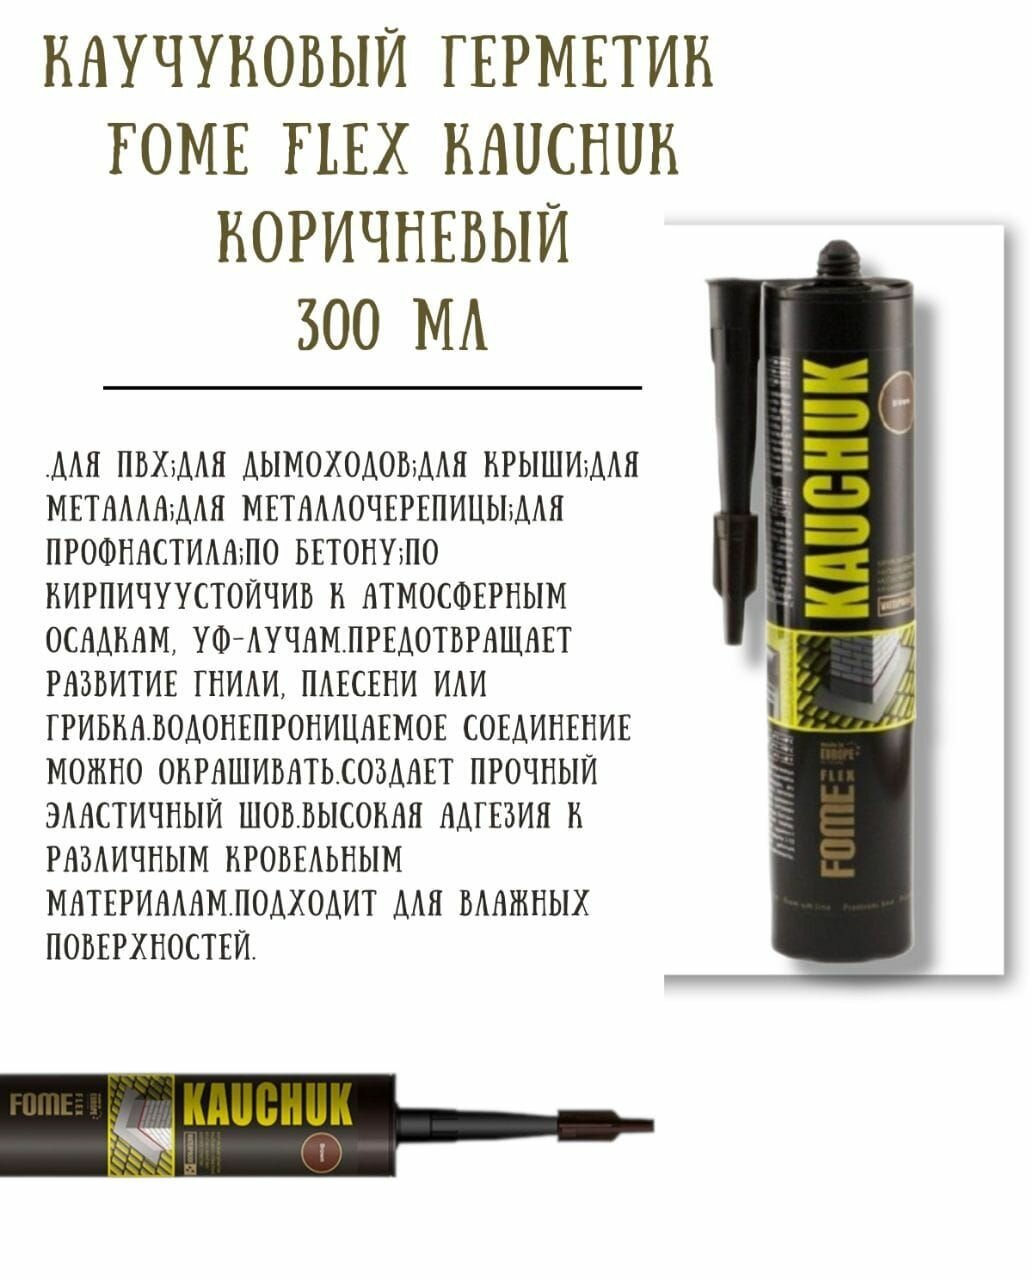 Герметик каучуковый коричневый Fome Flex Kauchuk 300 мл